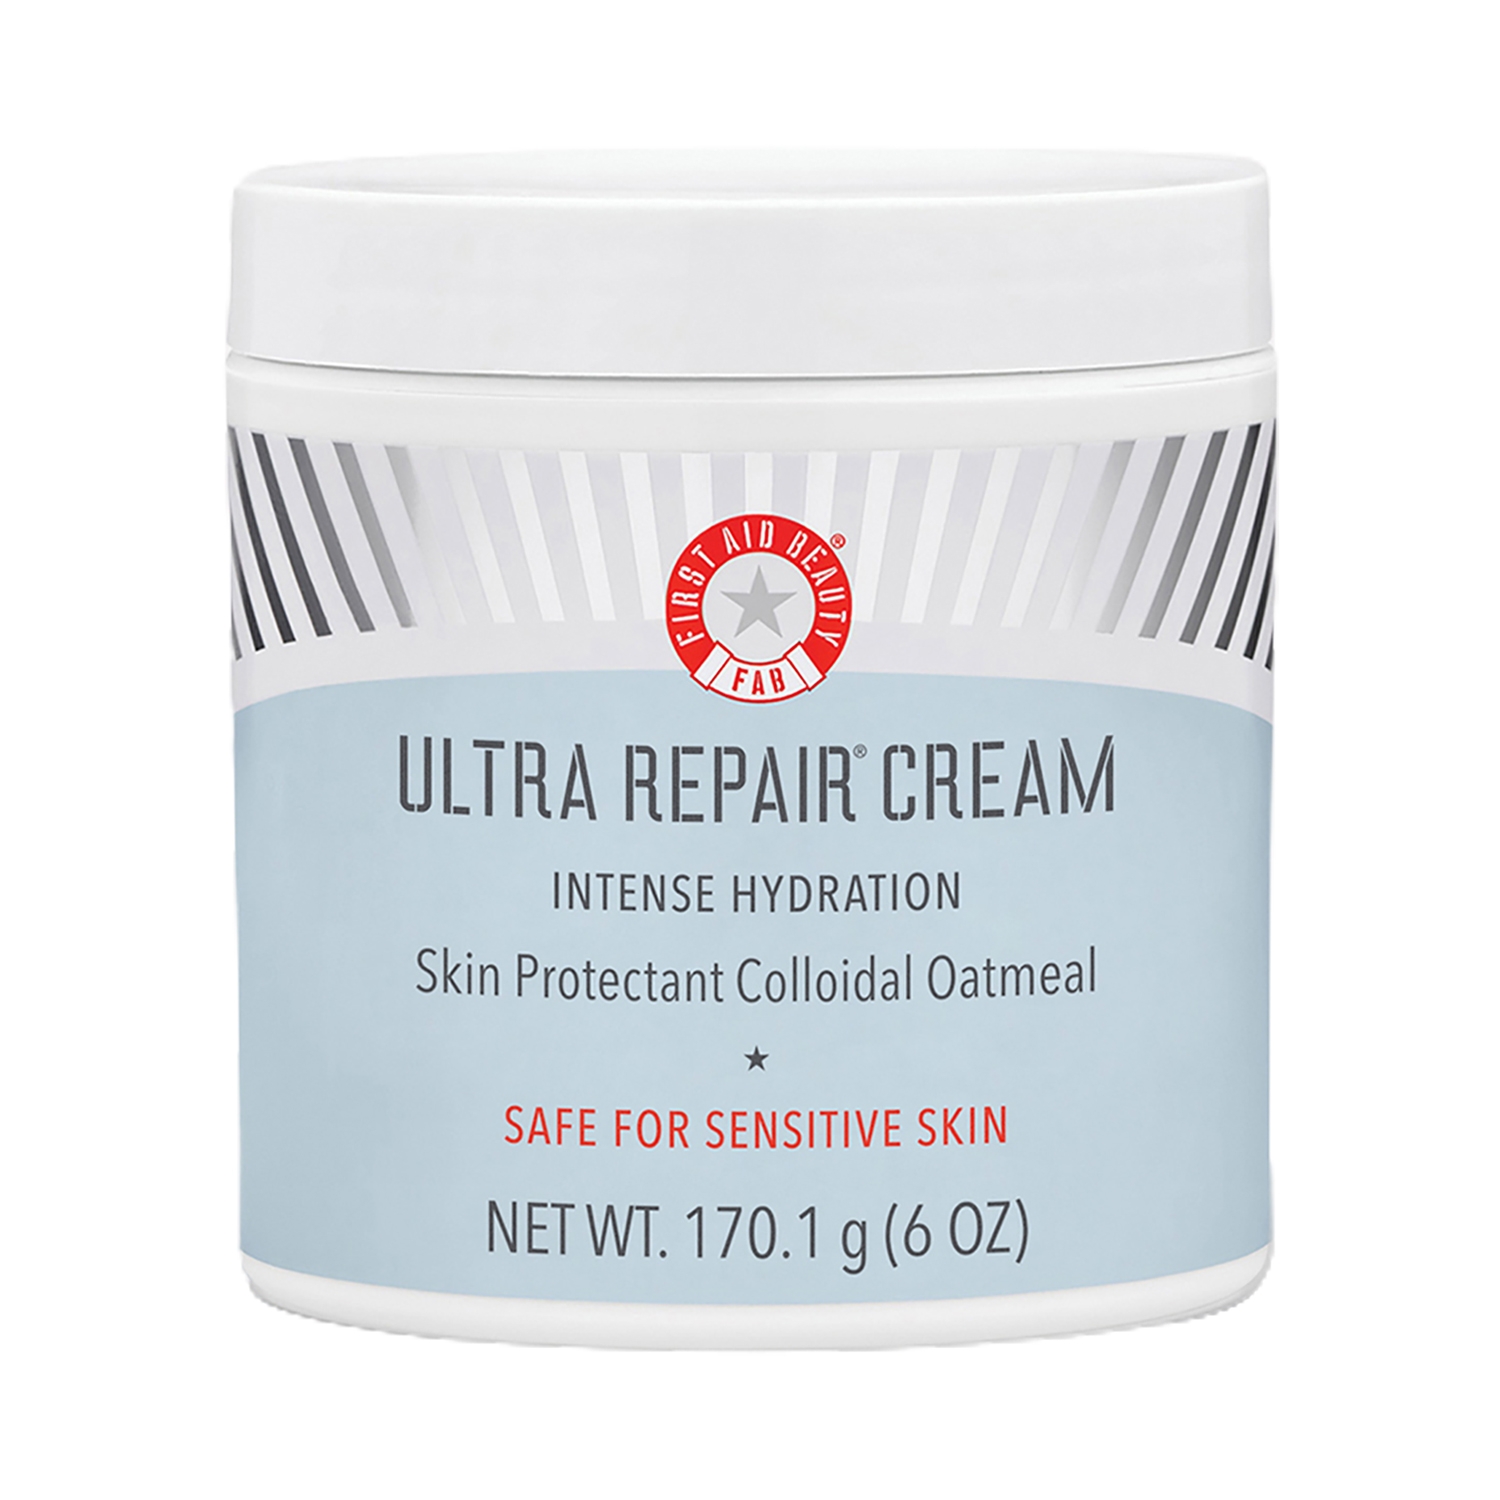 First Aid Beauty | First Aid Beauty Ultra Repair Cream (170.1g)